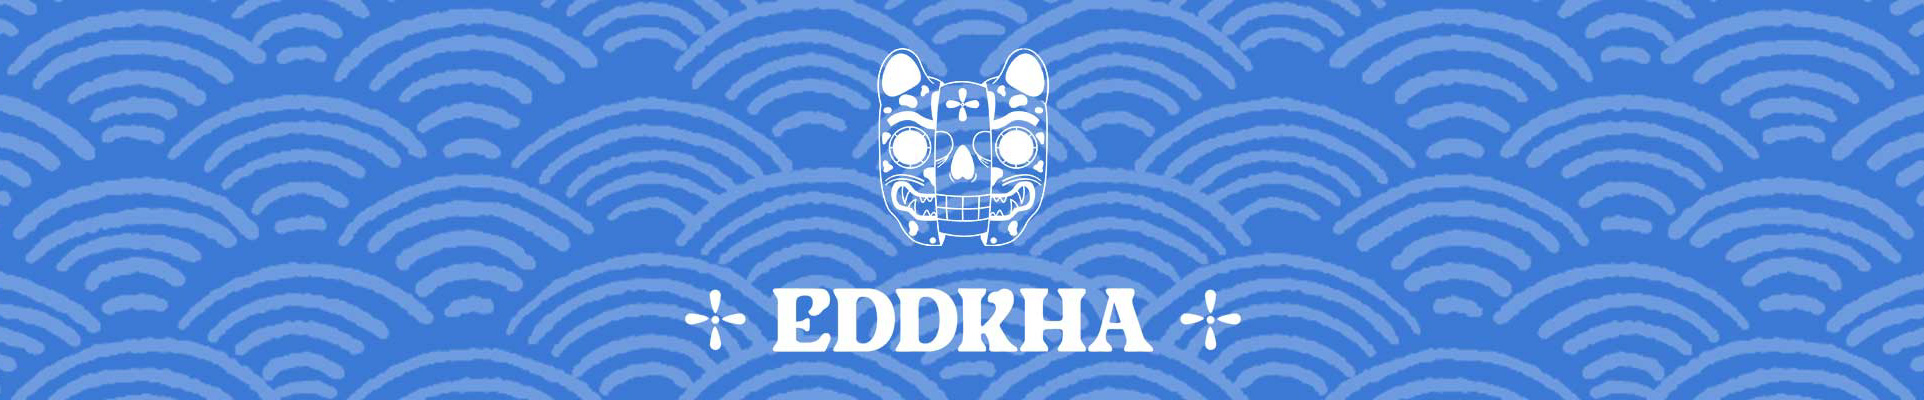 Eddkha .'s profile banner